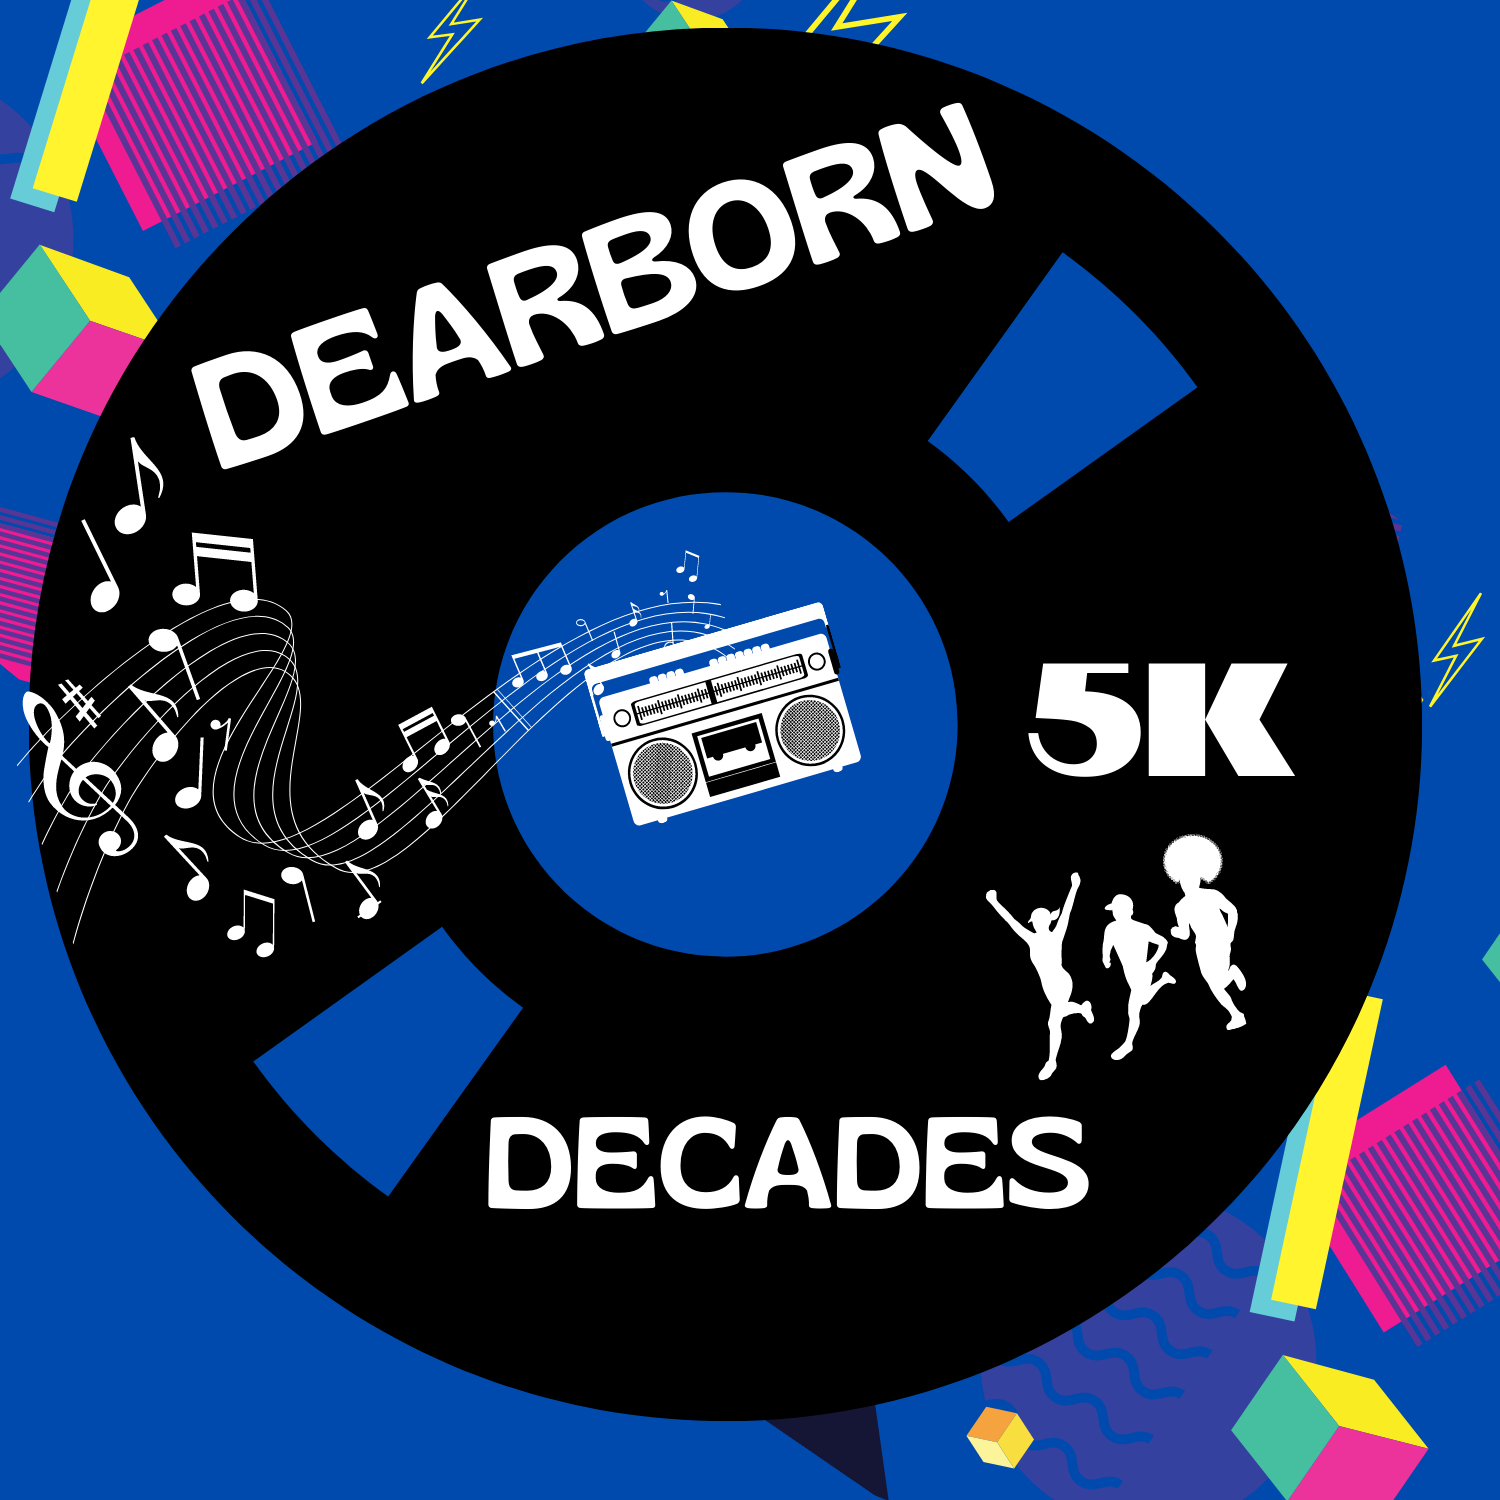 Dearborn Decades 5K logo on RaceRaves